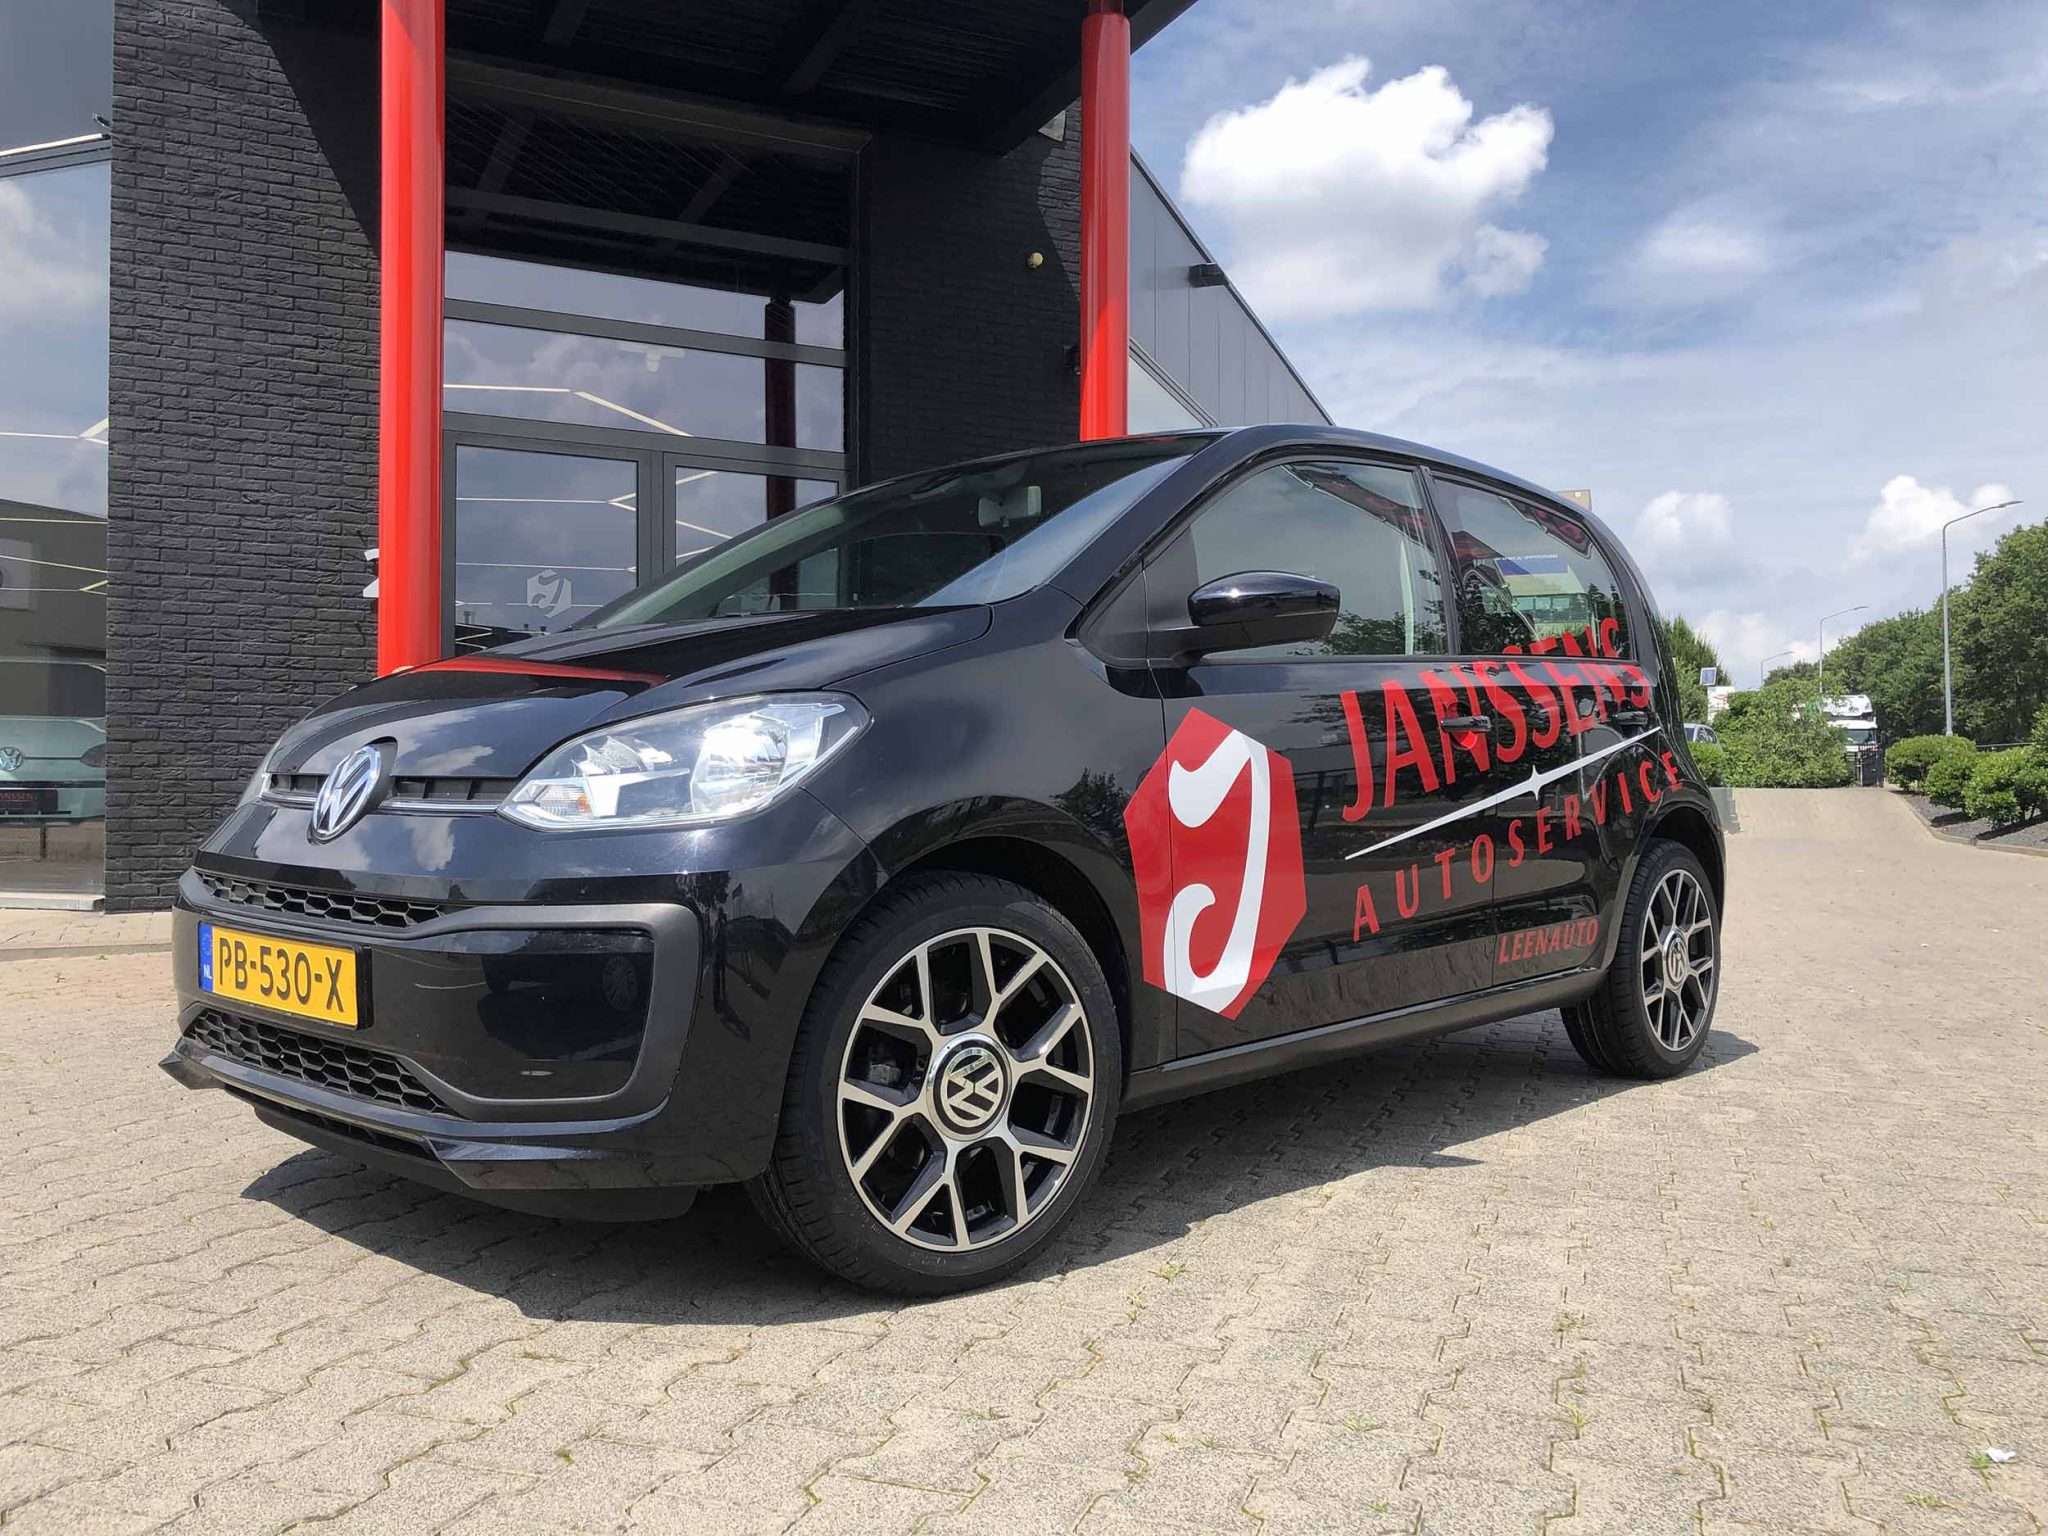 Autobelettering Janssens Autoservice Venlo